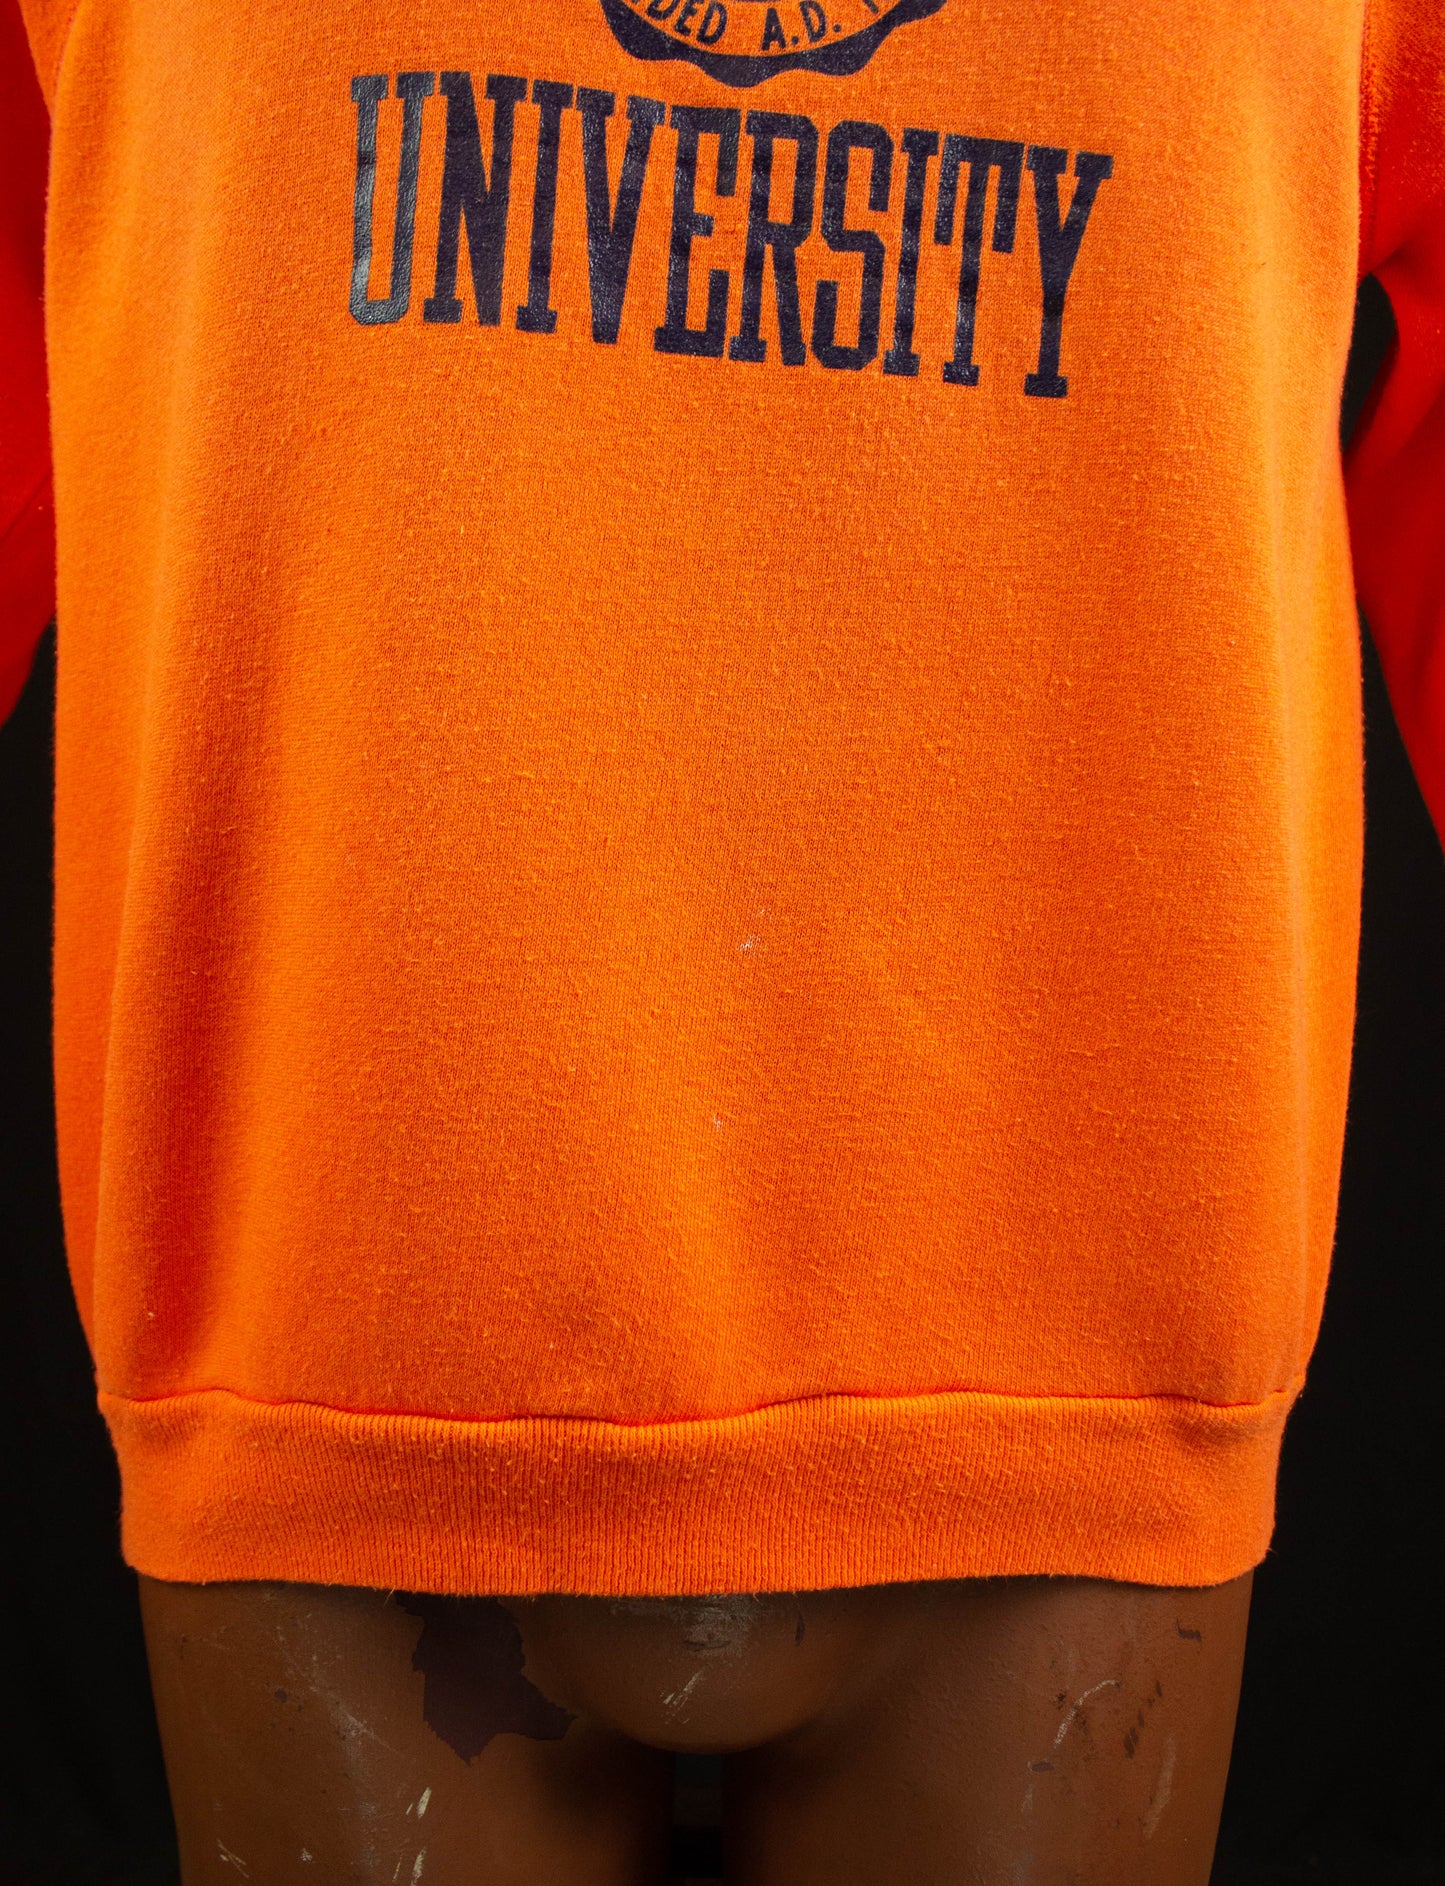 Vintage Syracuse University Raglan Crewneck Sweatshirt 70s Velva Sheen Orange and Navy Blue Large